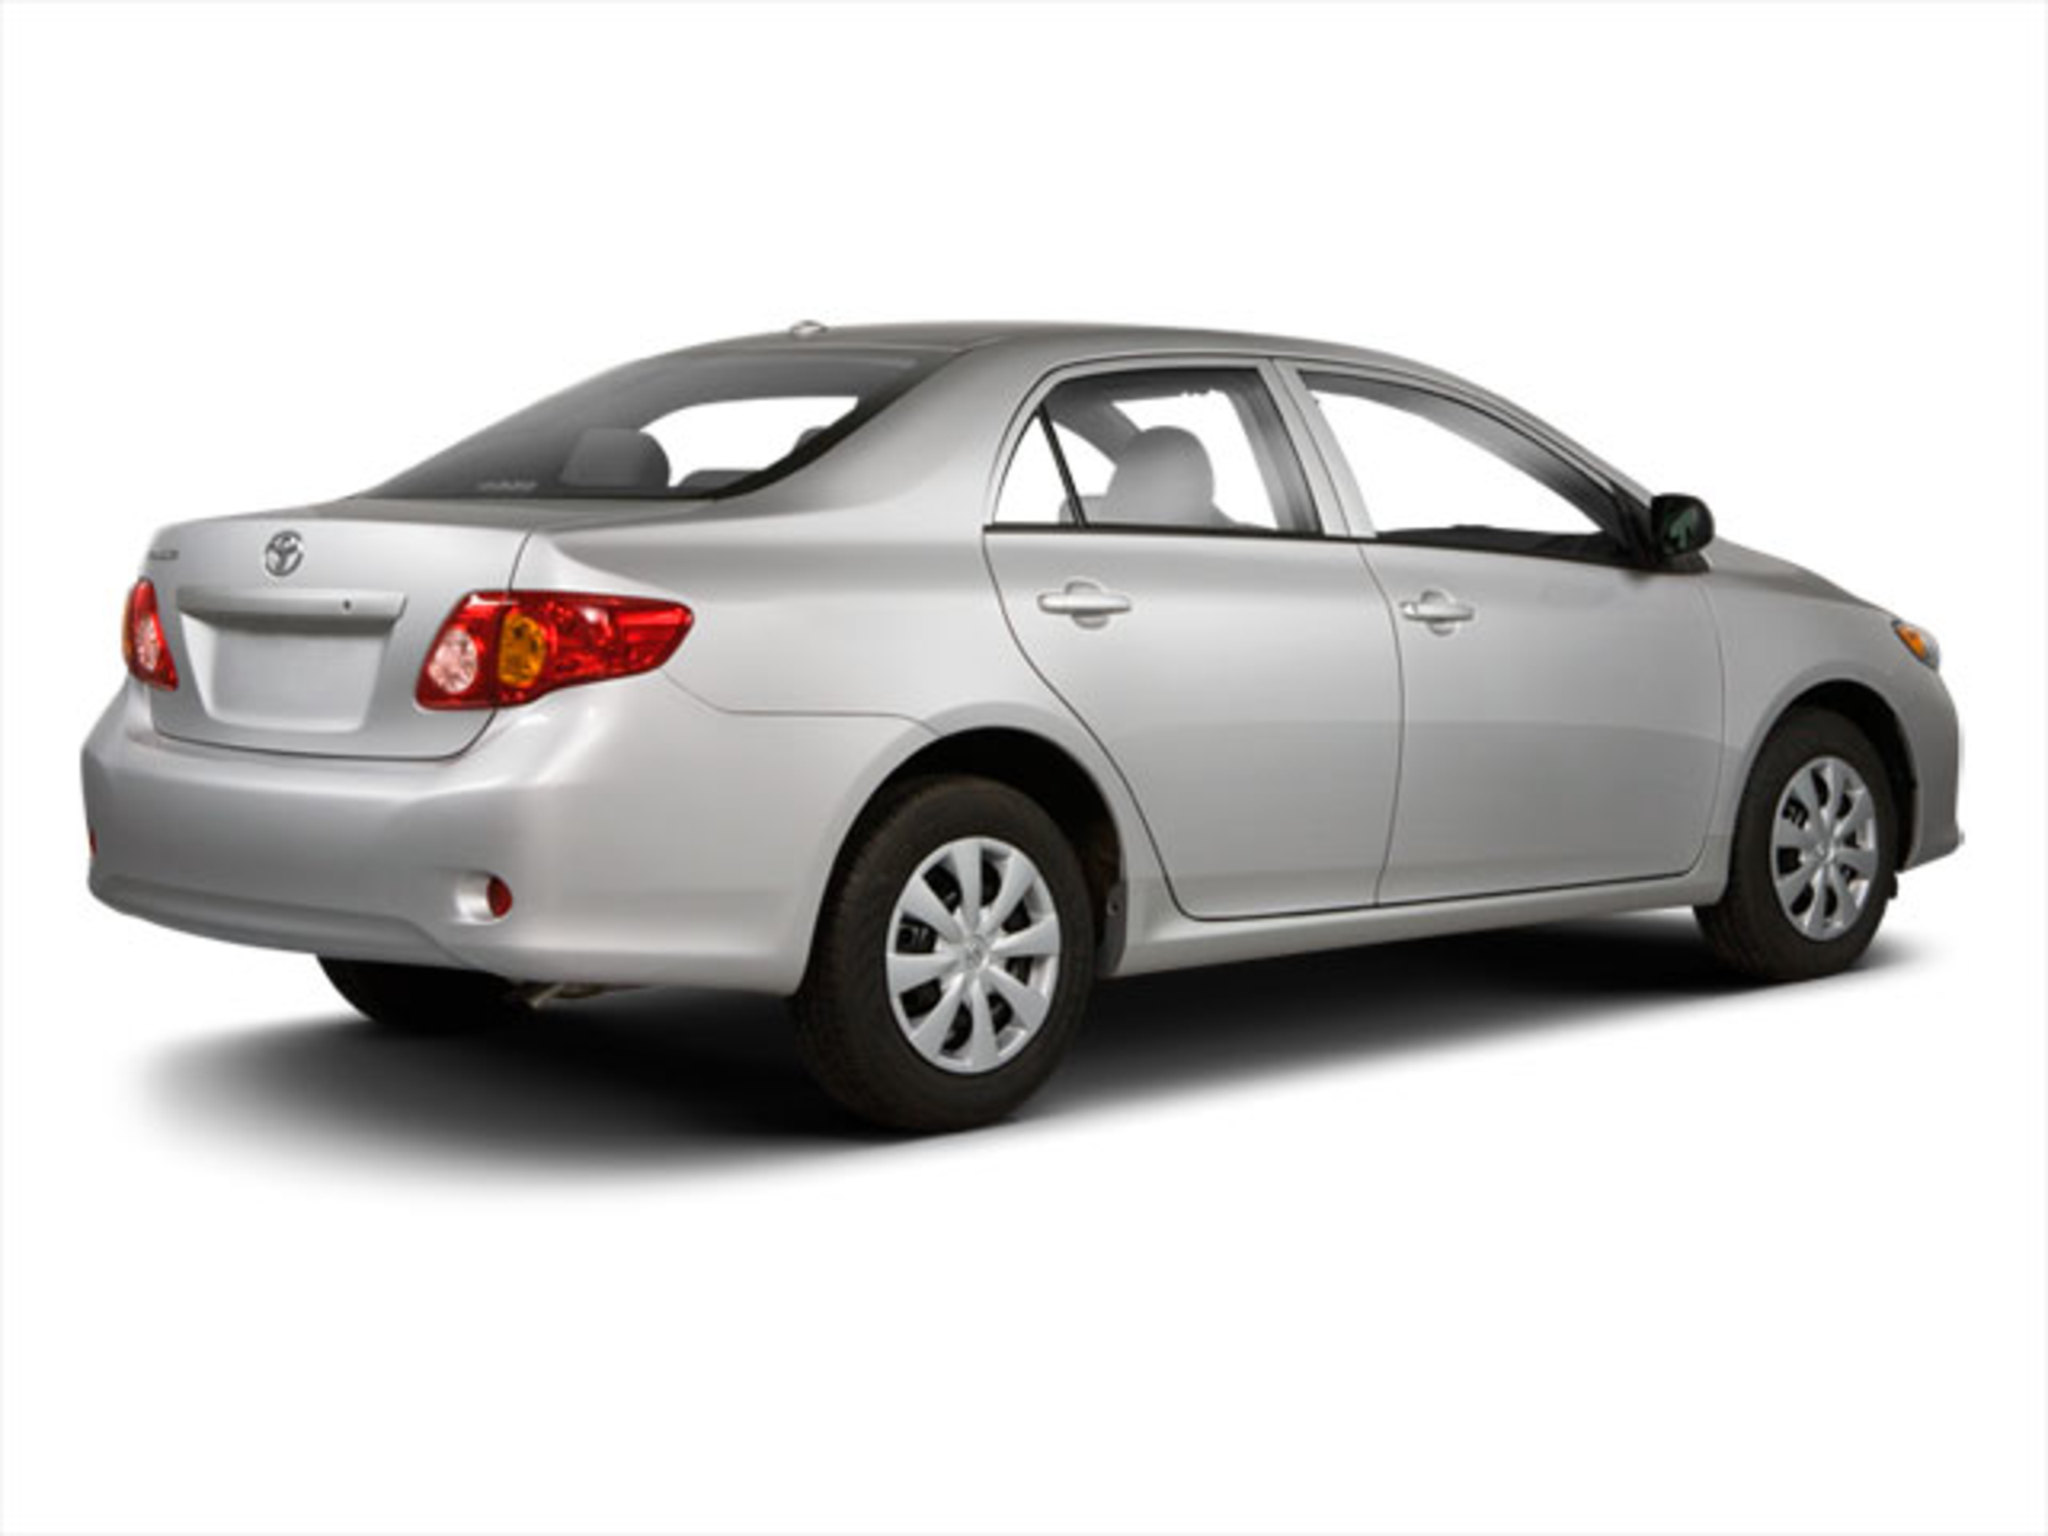 2010 Toyota Corolla - Compare Prices, Trims, Options, Specs, Photos ...